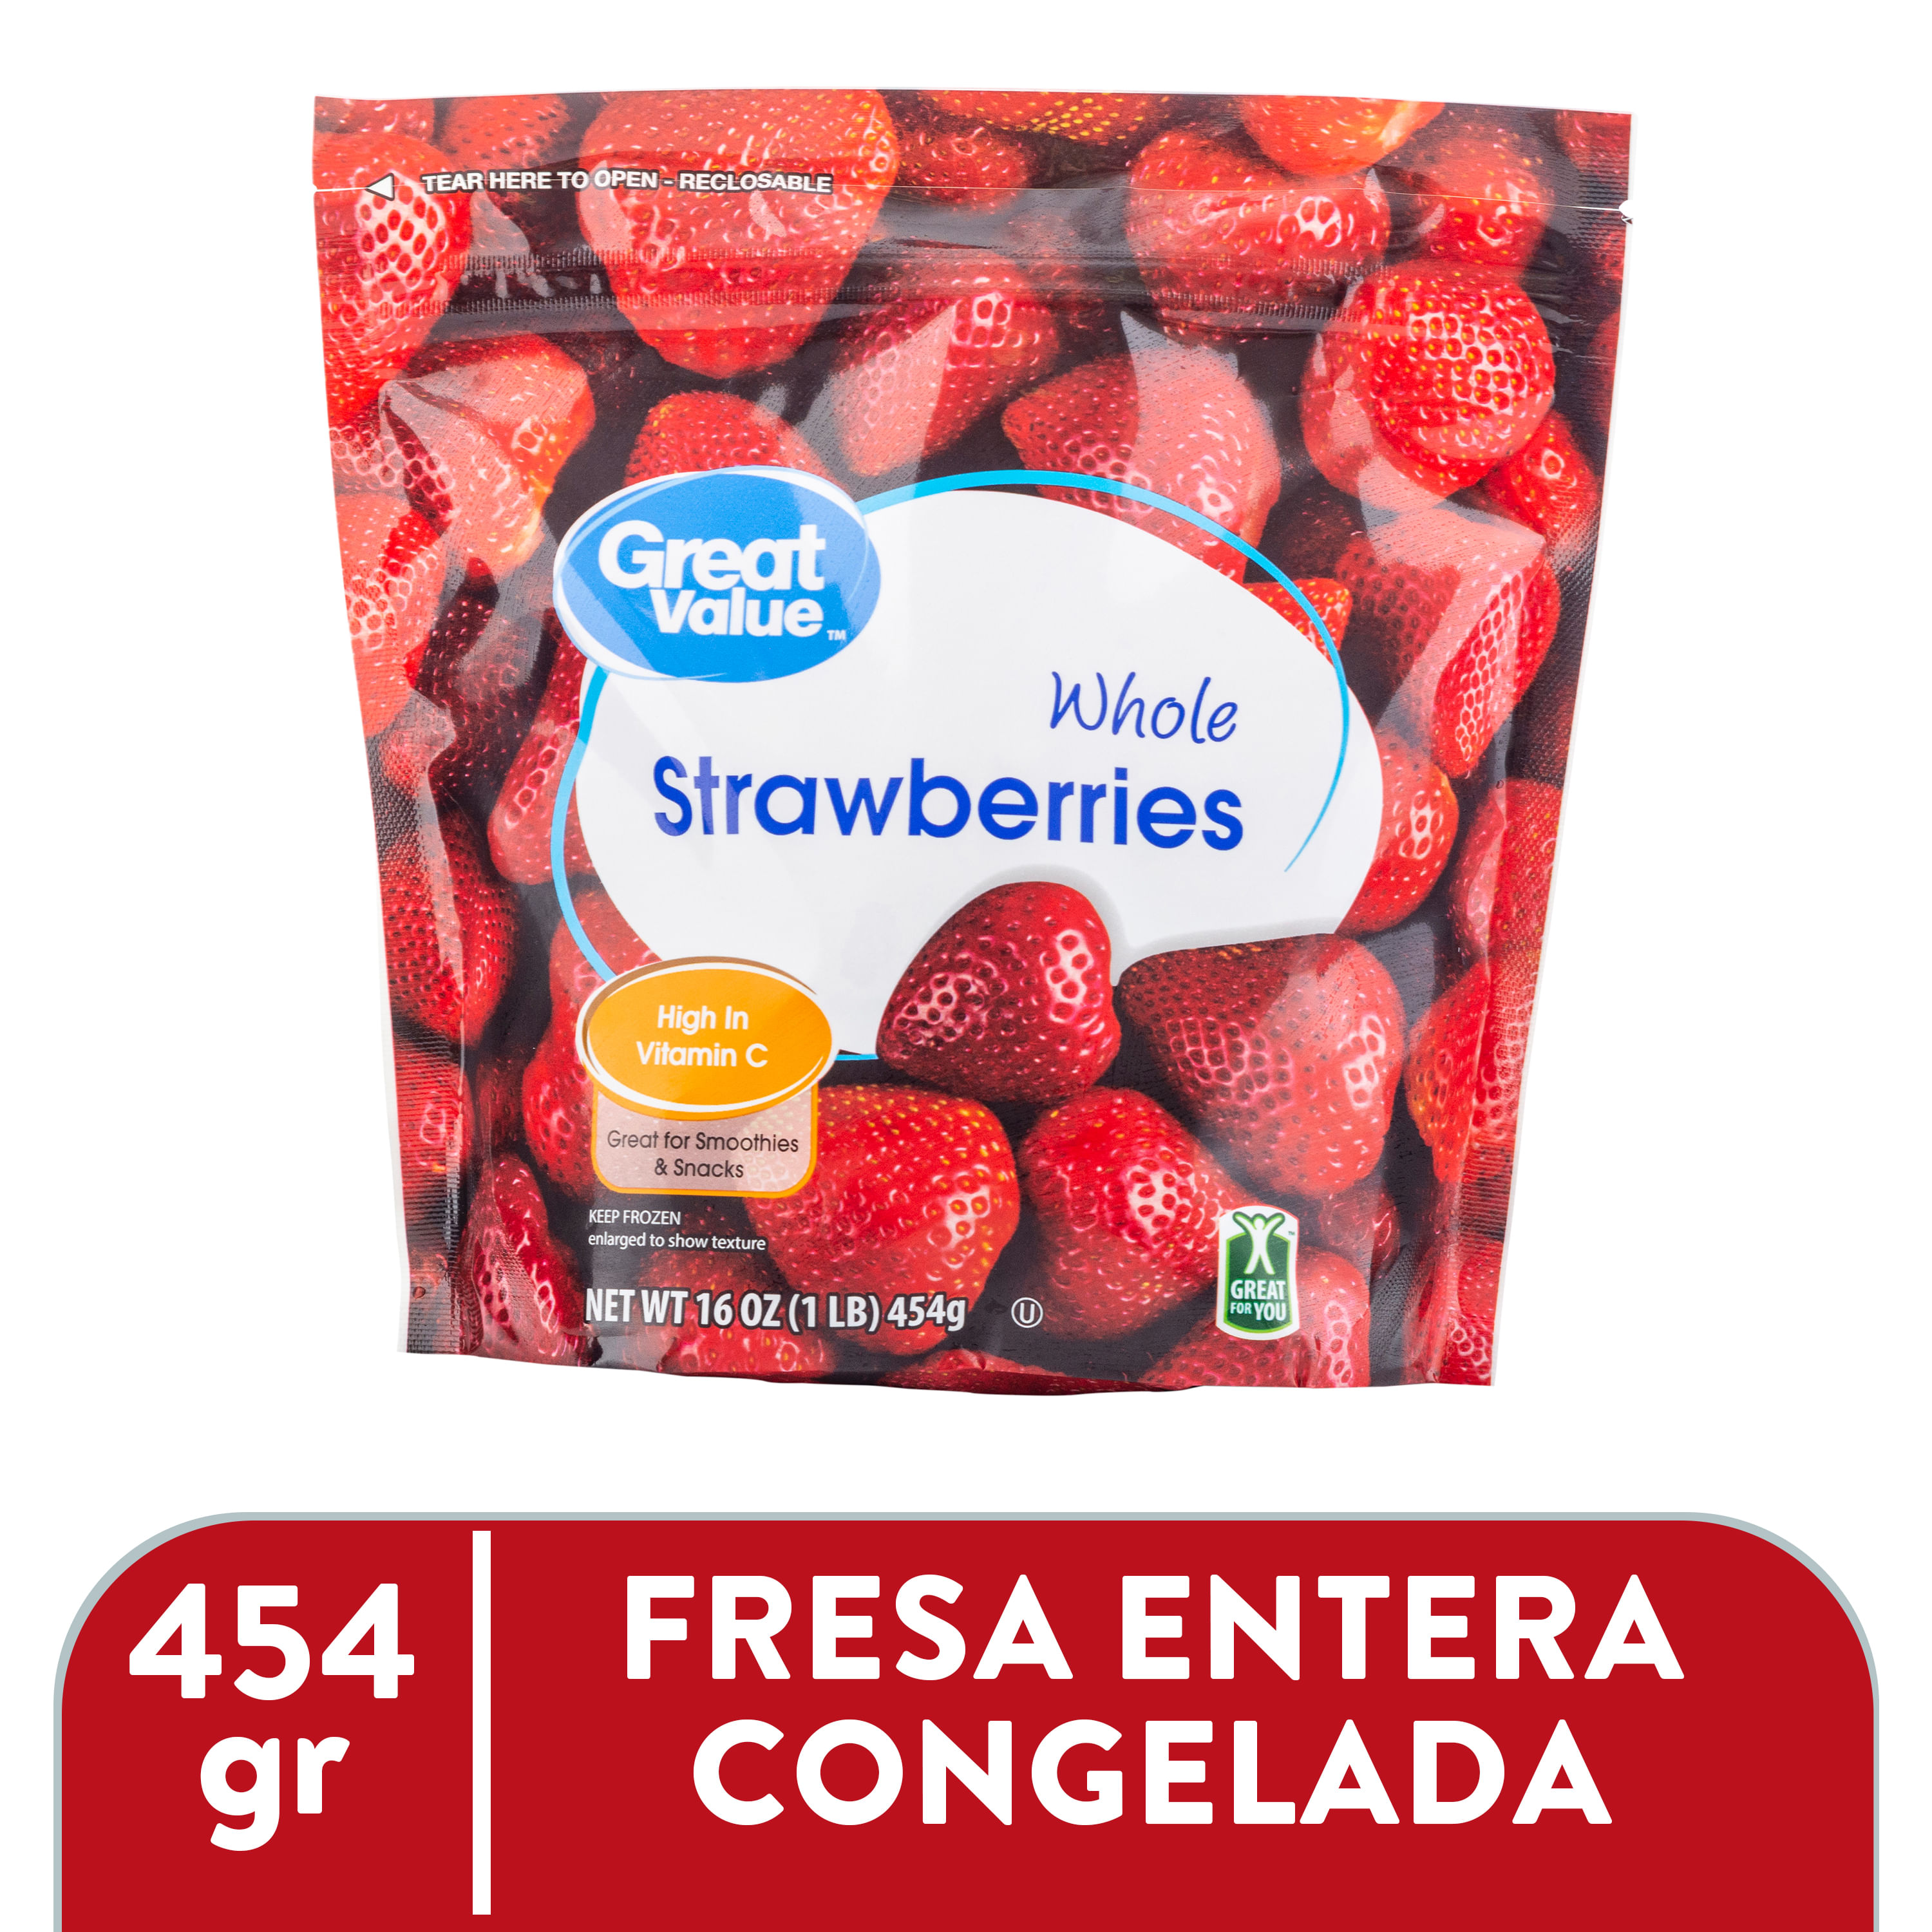 Fresas-Great-Value-Enteras-Congelada-454gr-1-27387